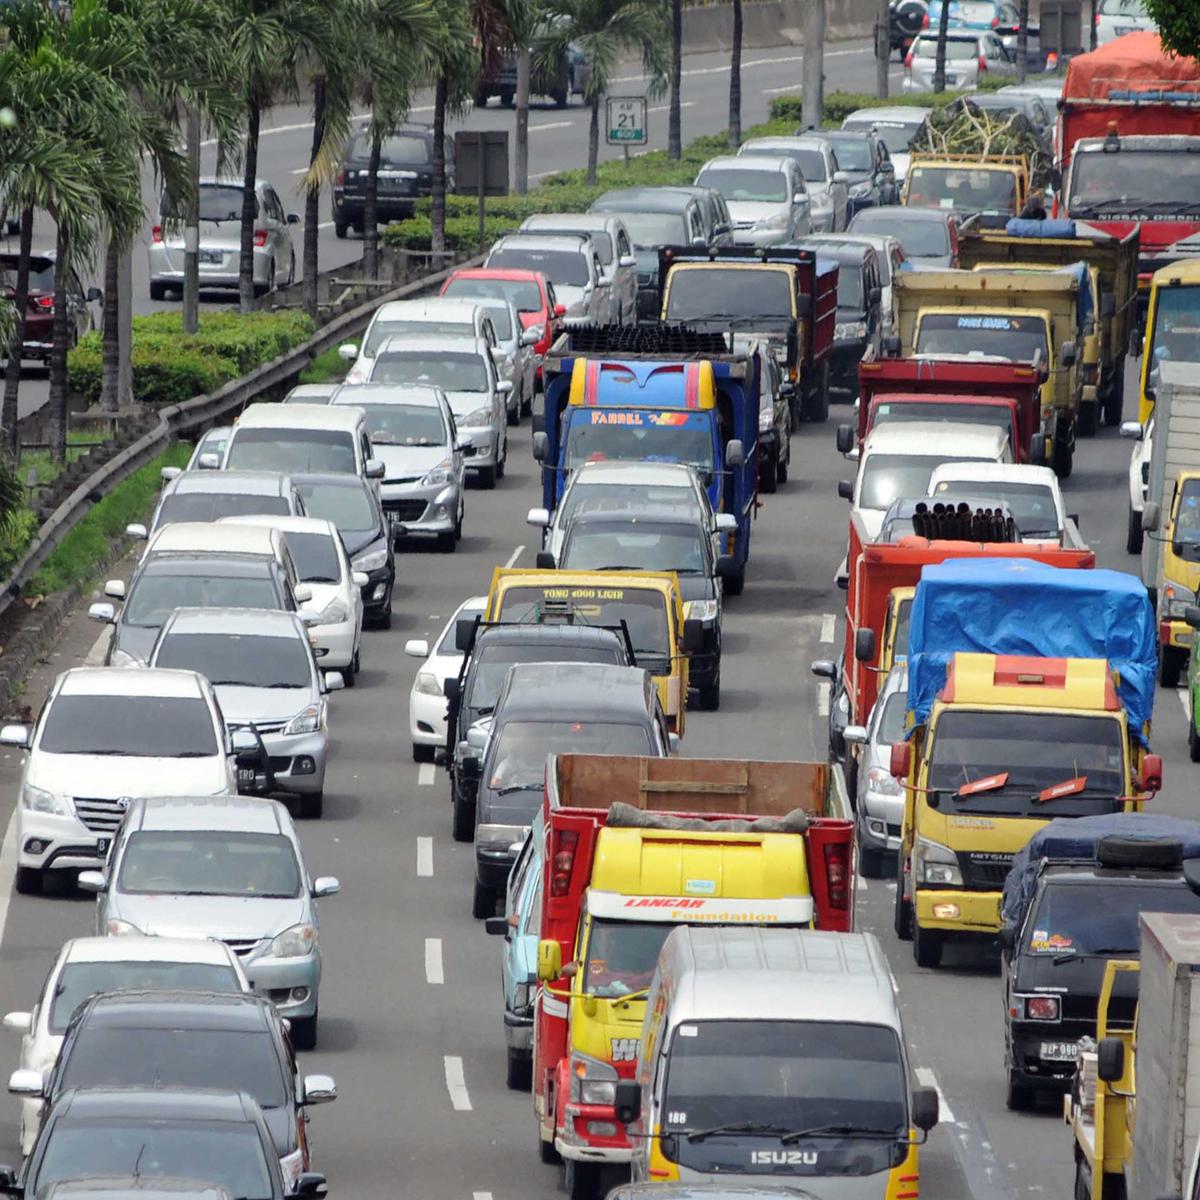 kemacetan telah menjadi hal yang biasa di jakarta kemacetan tersebut disebabkan oleh beberapa faktor